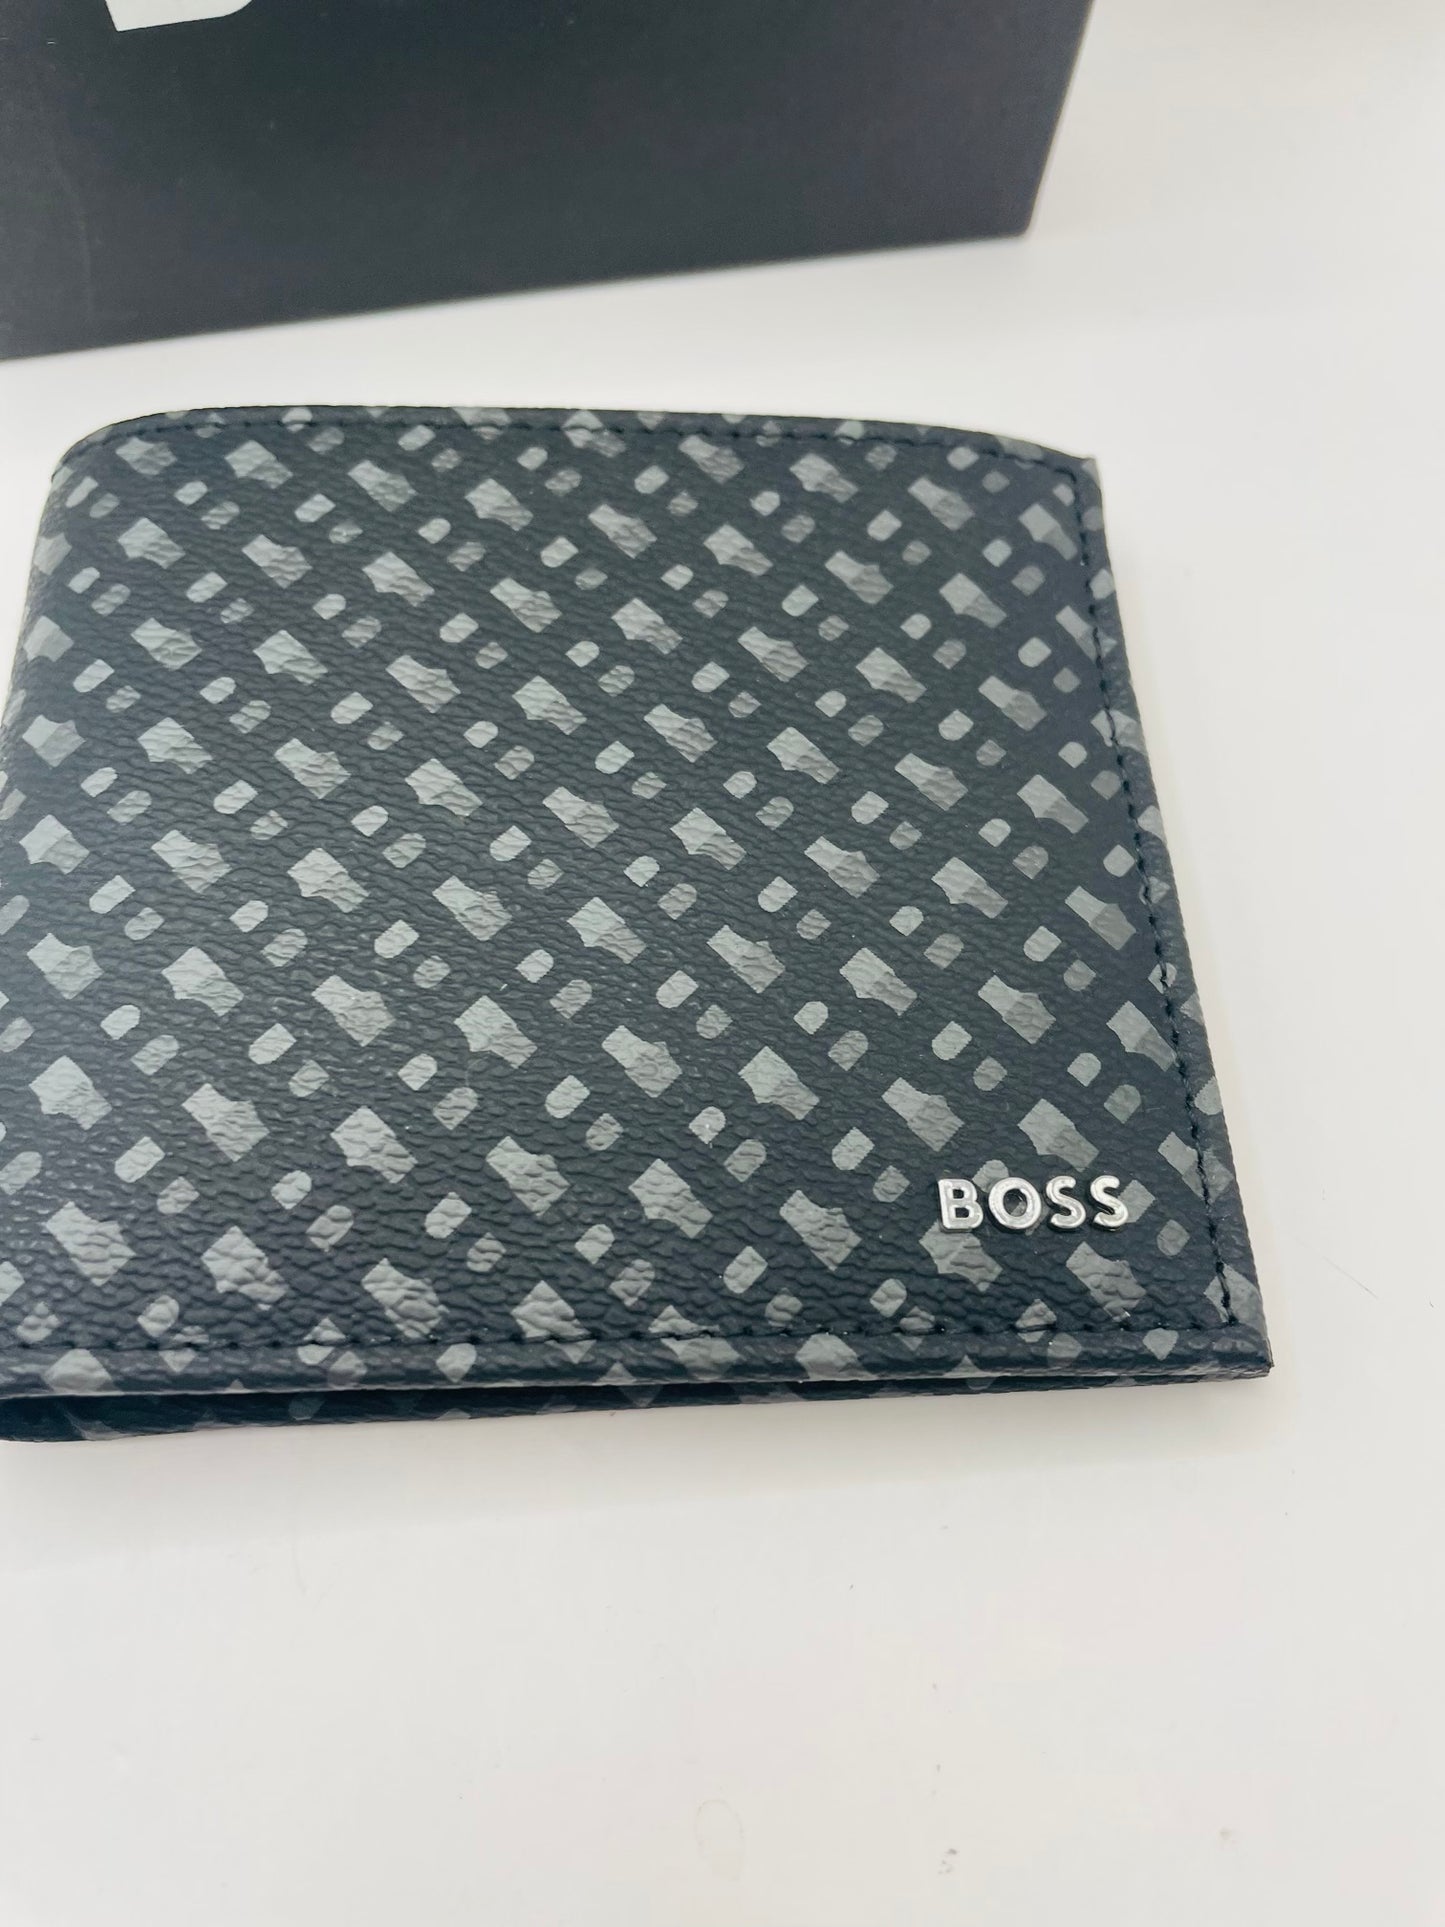 Boss wallet